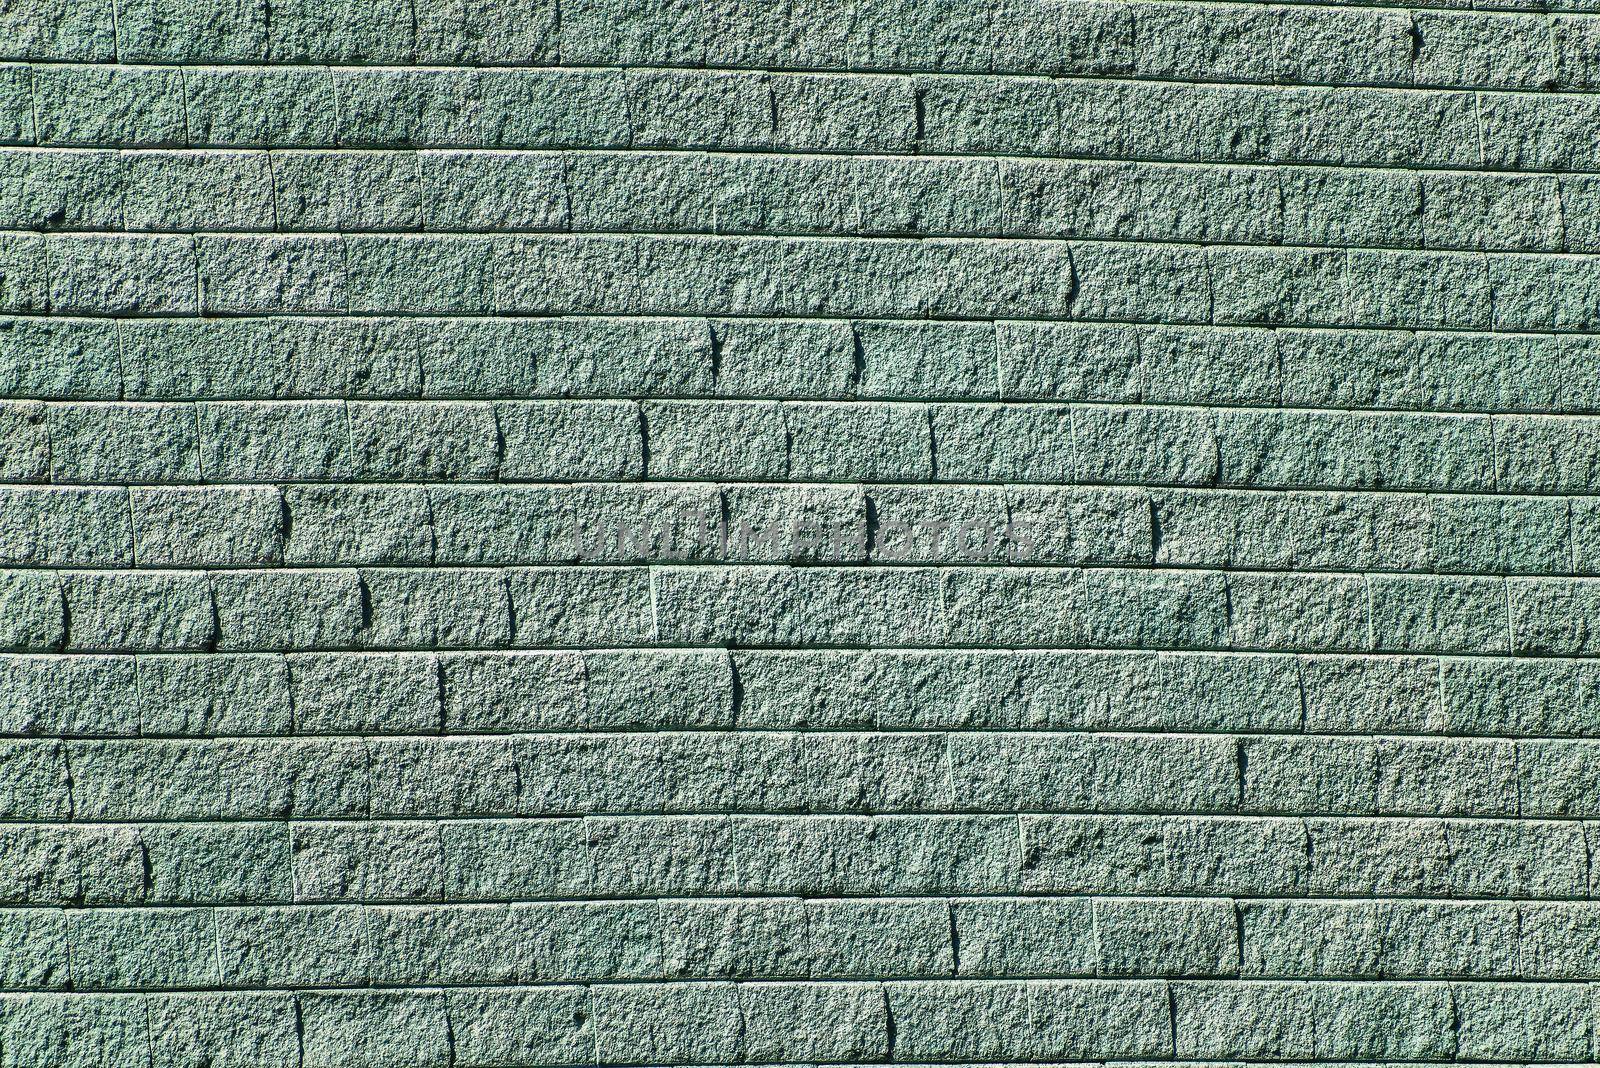 Wall of gray-green brick segments rustic by rostik924